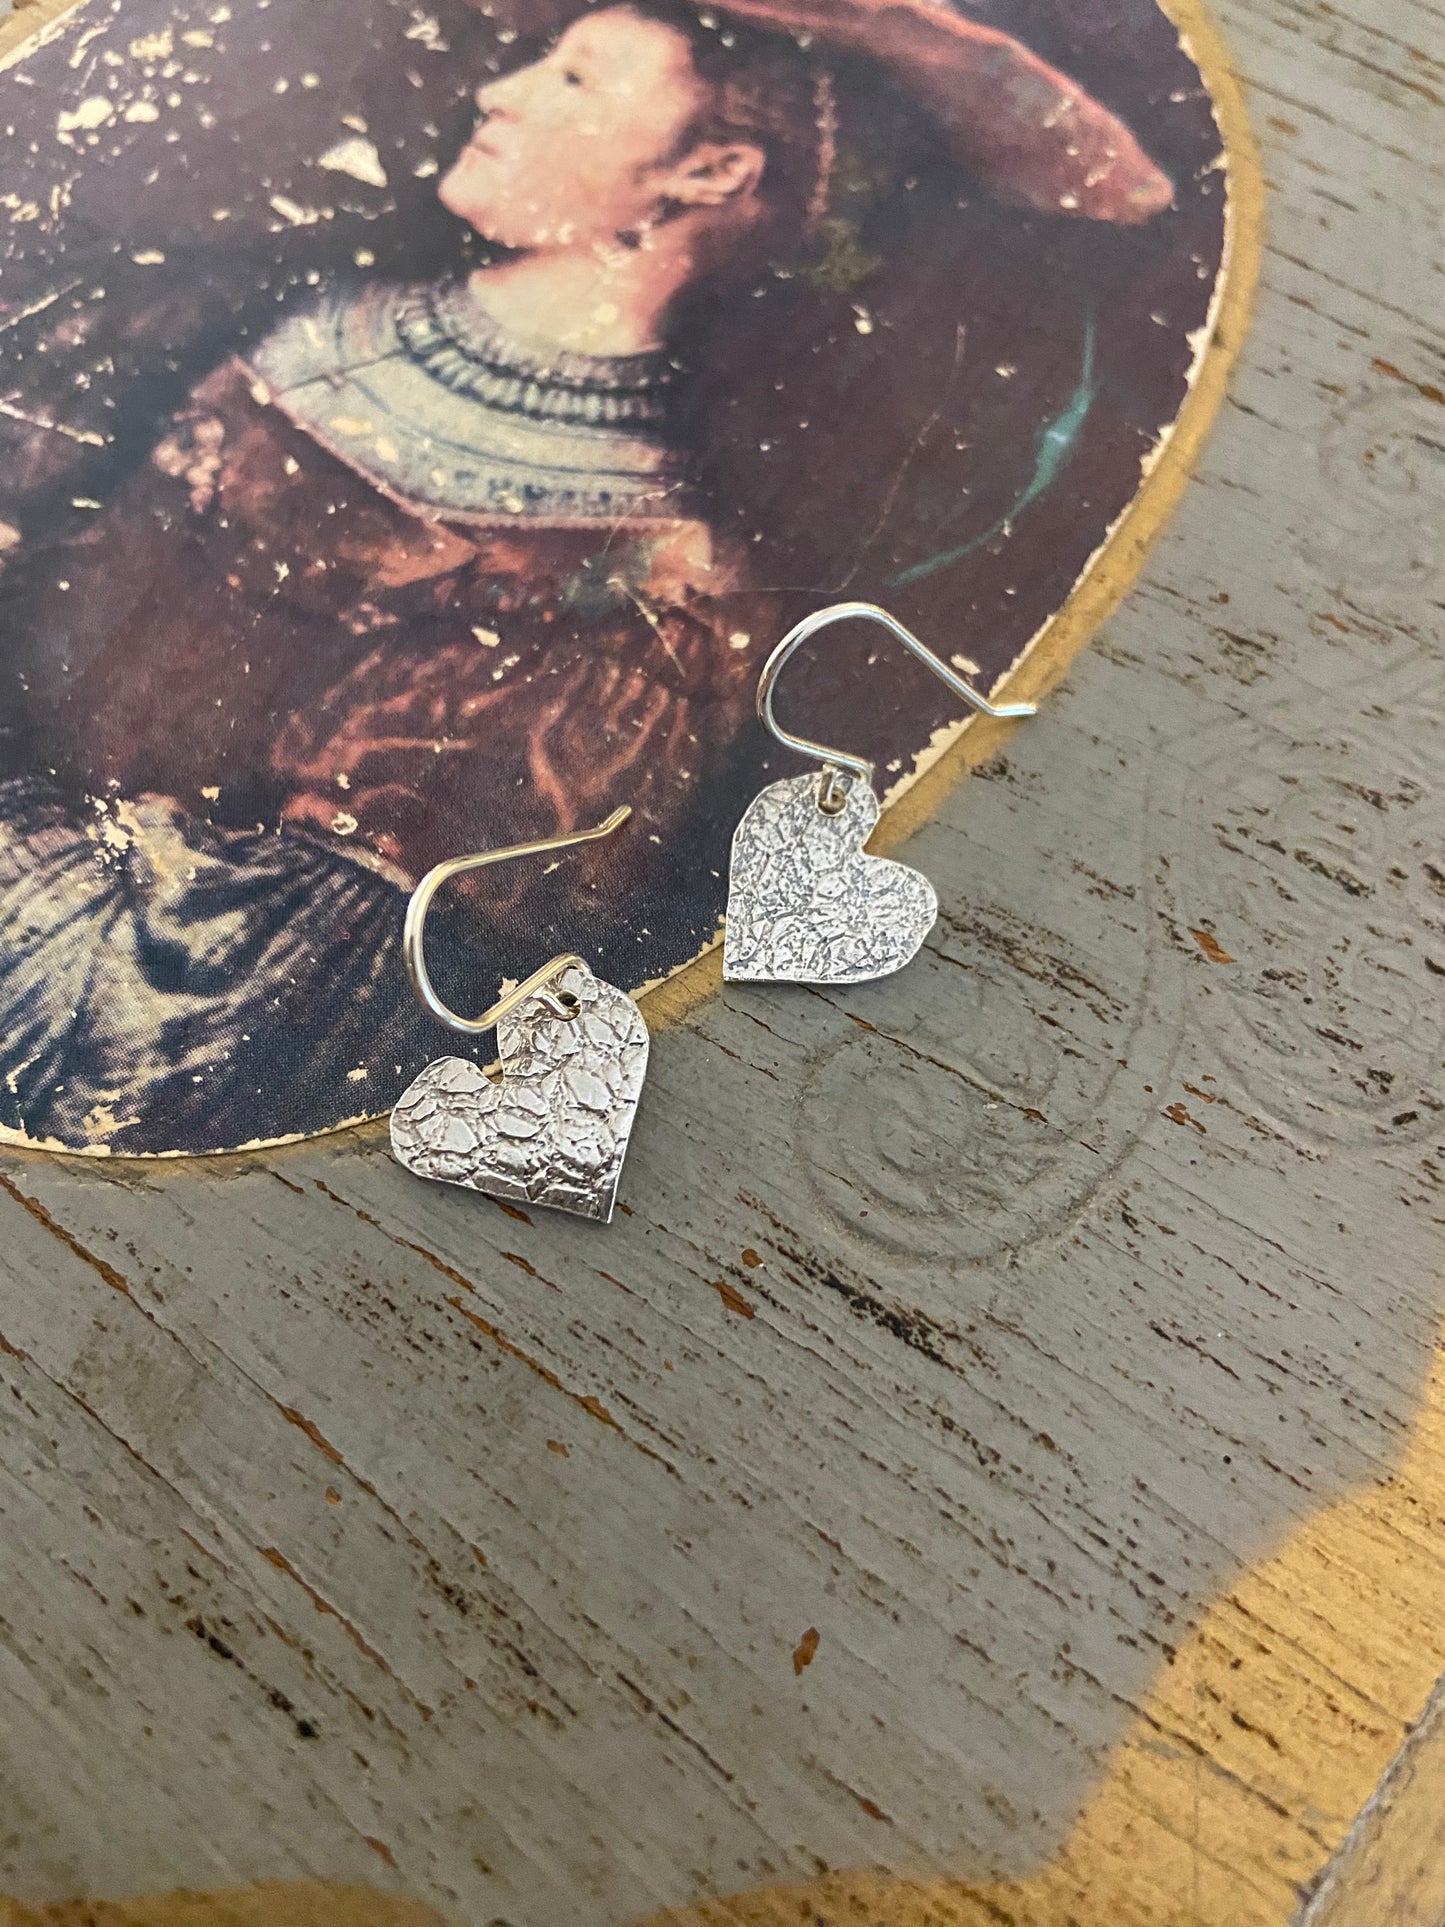 Sterling Silver Handmade Small Heart Earrings